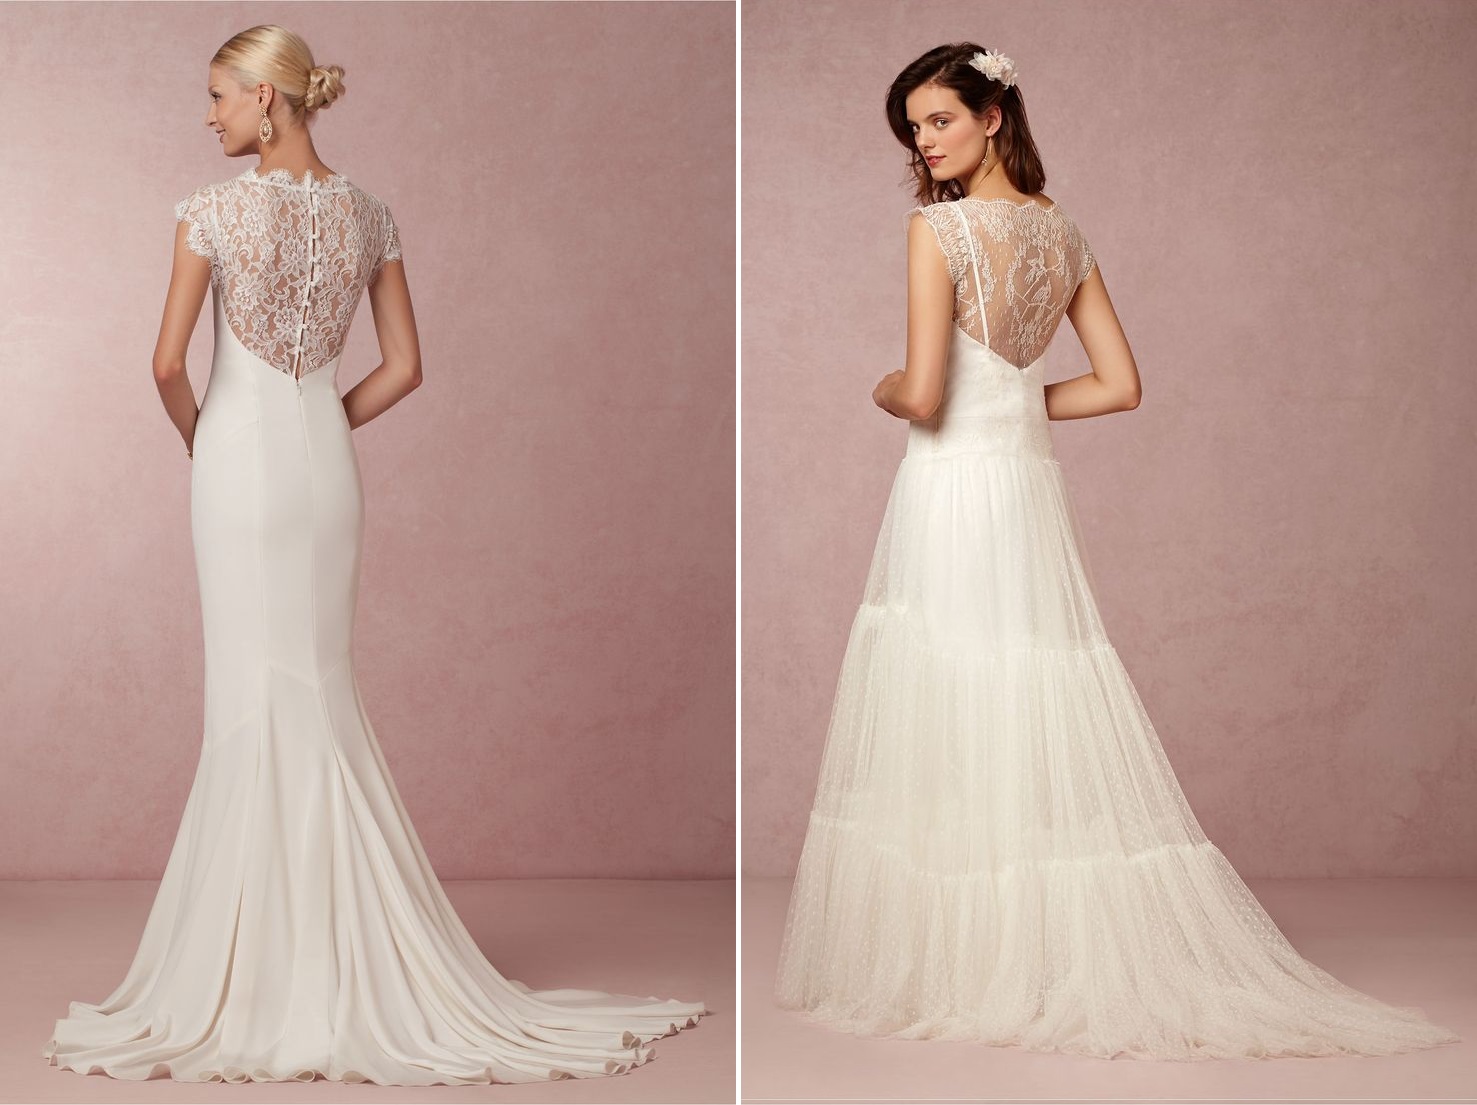 Lauren & Margot Wedding Dresses from BHLDNs Spring 2015 Bridal Collection